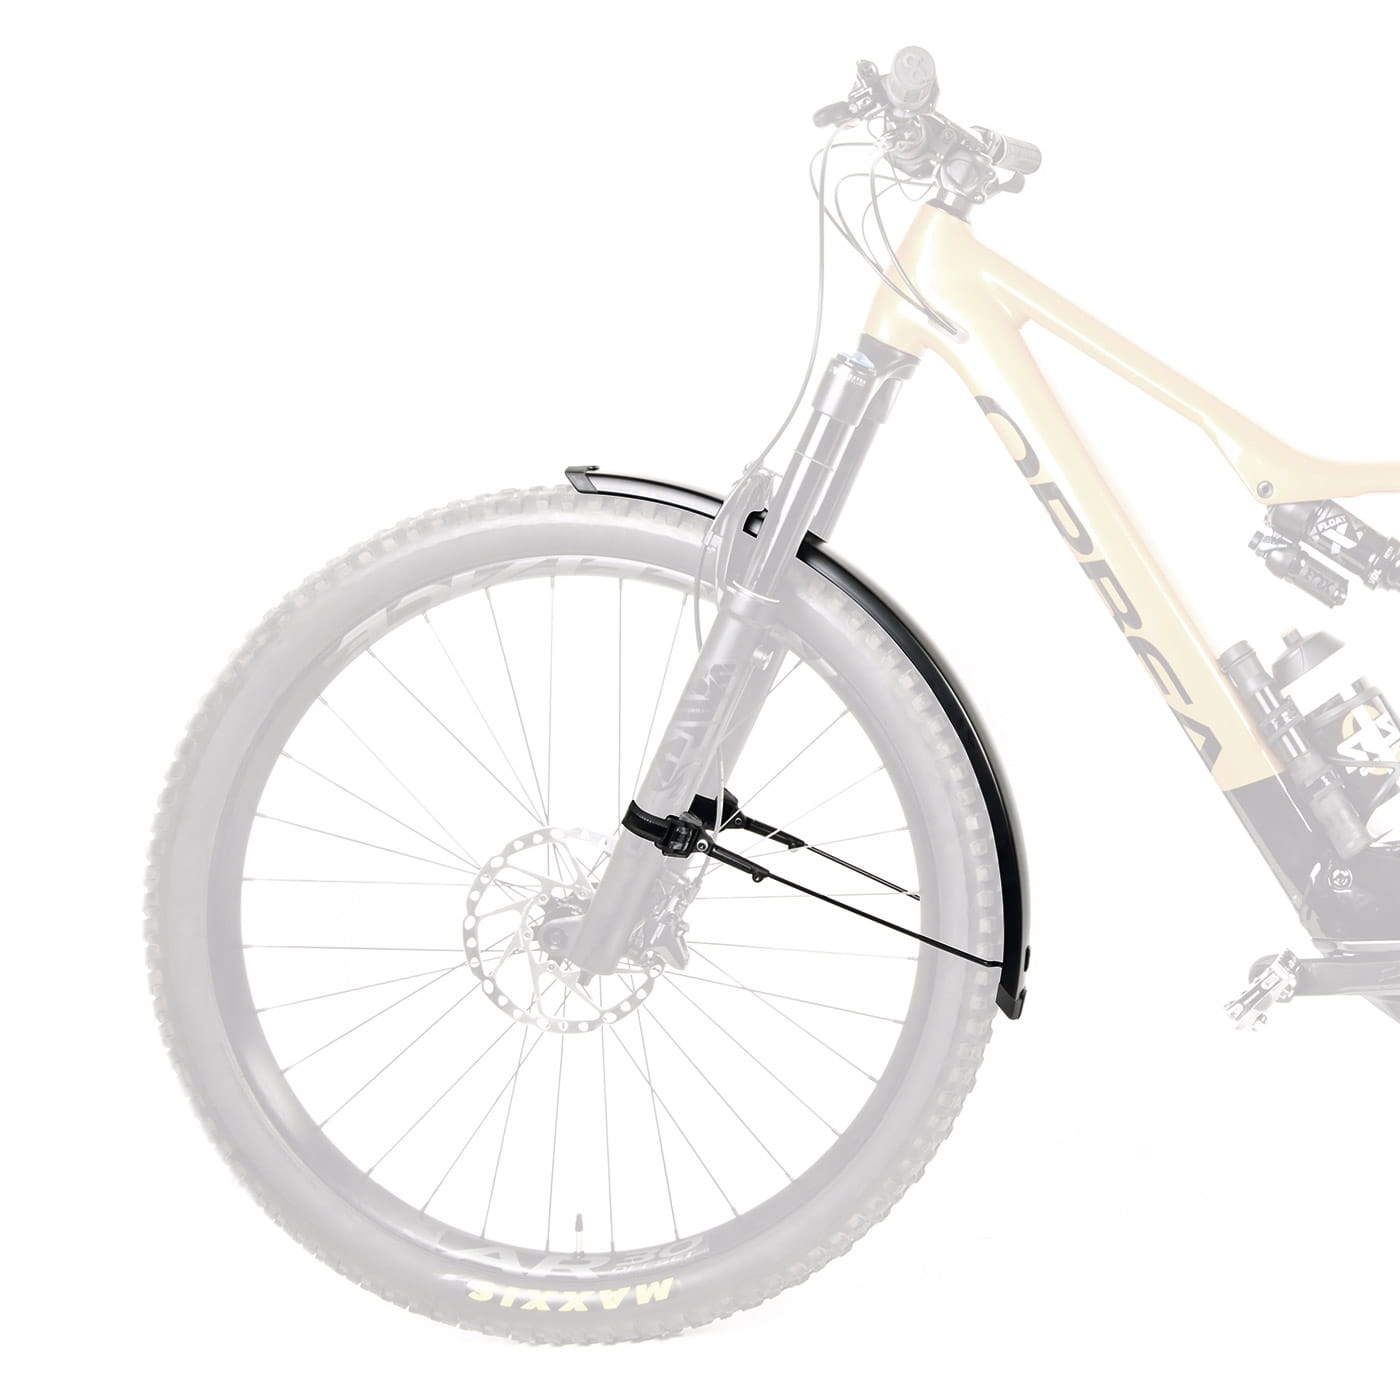 Rahmenschutz Steinschlagprotektor Mudguard Gummi selbstklebend Fahrrad  EBike MTB